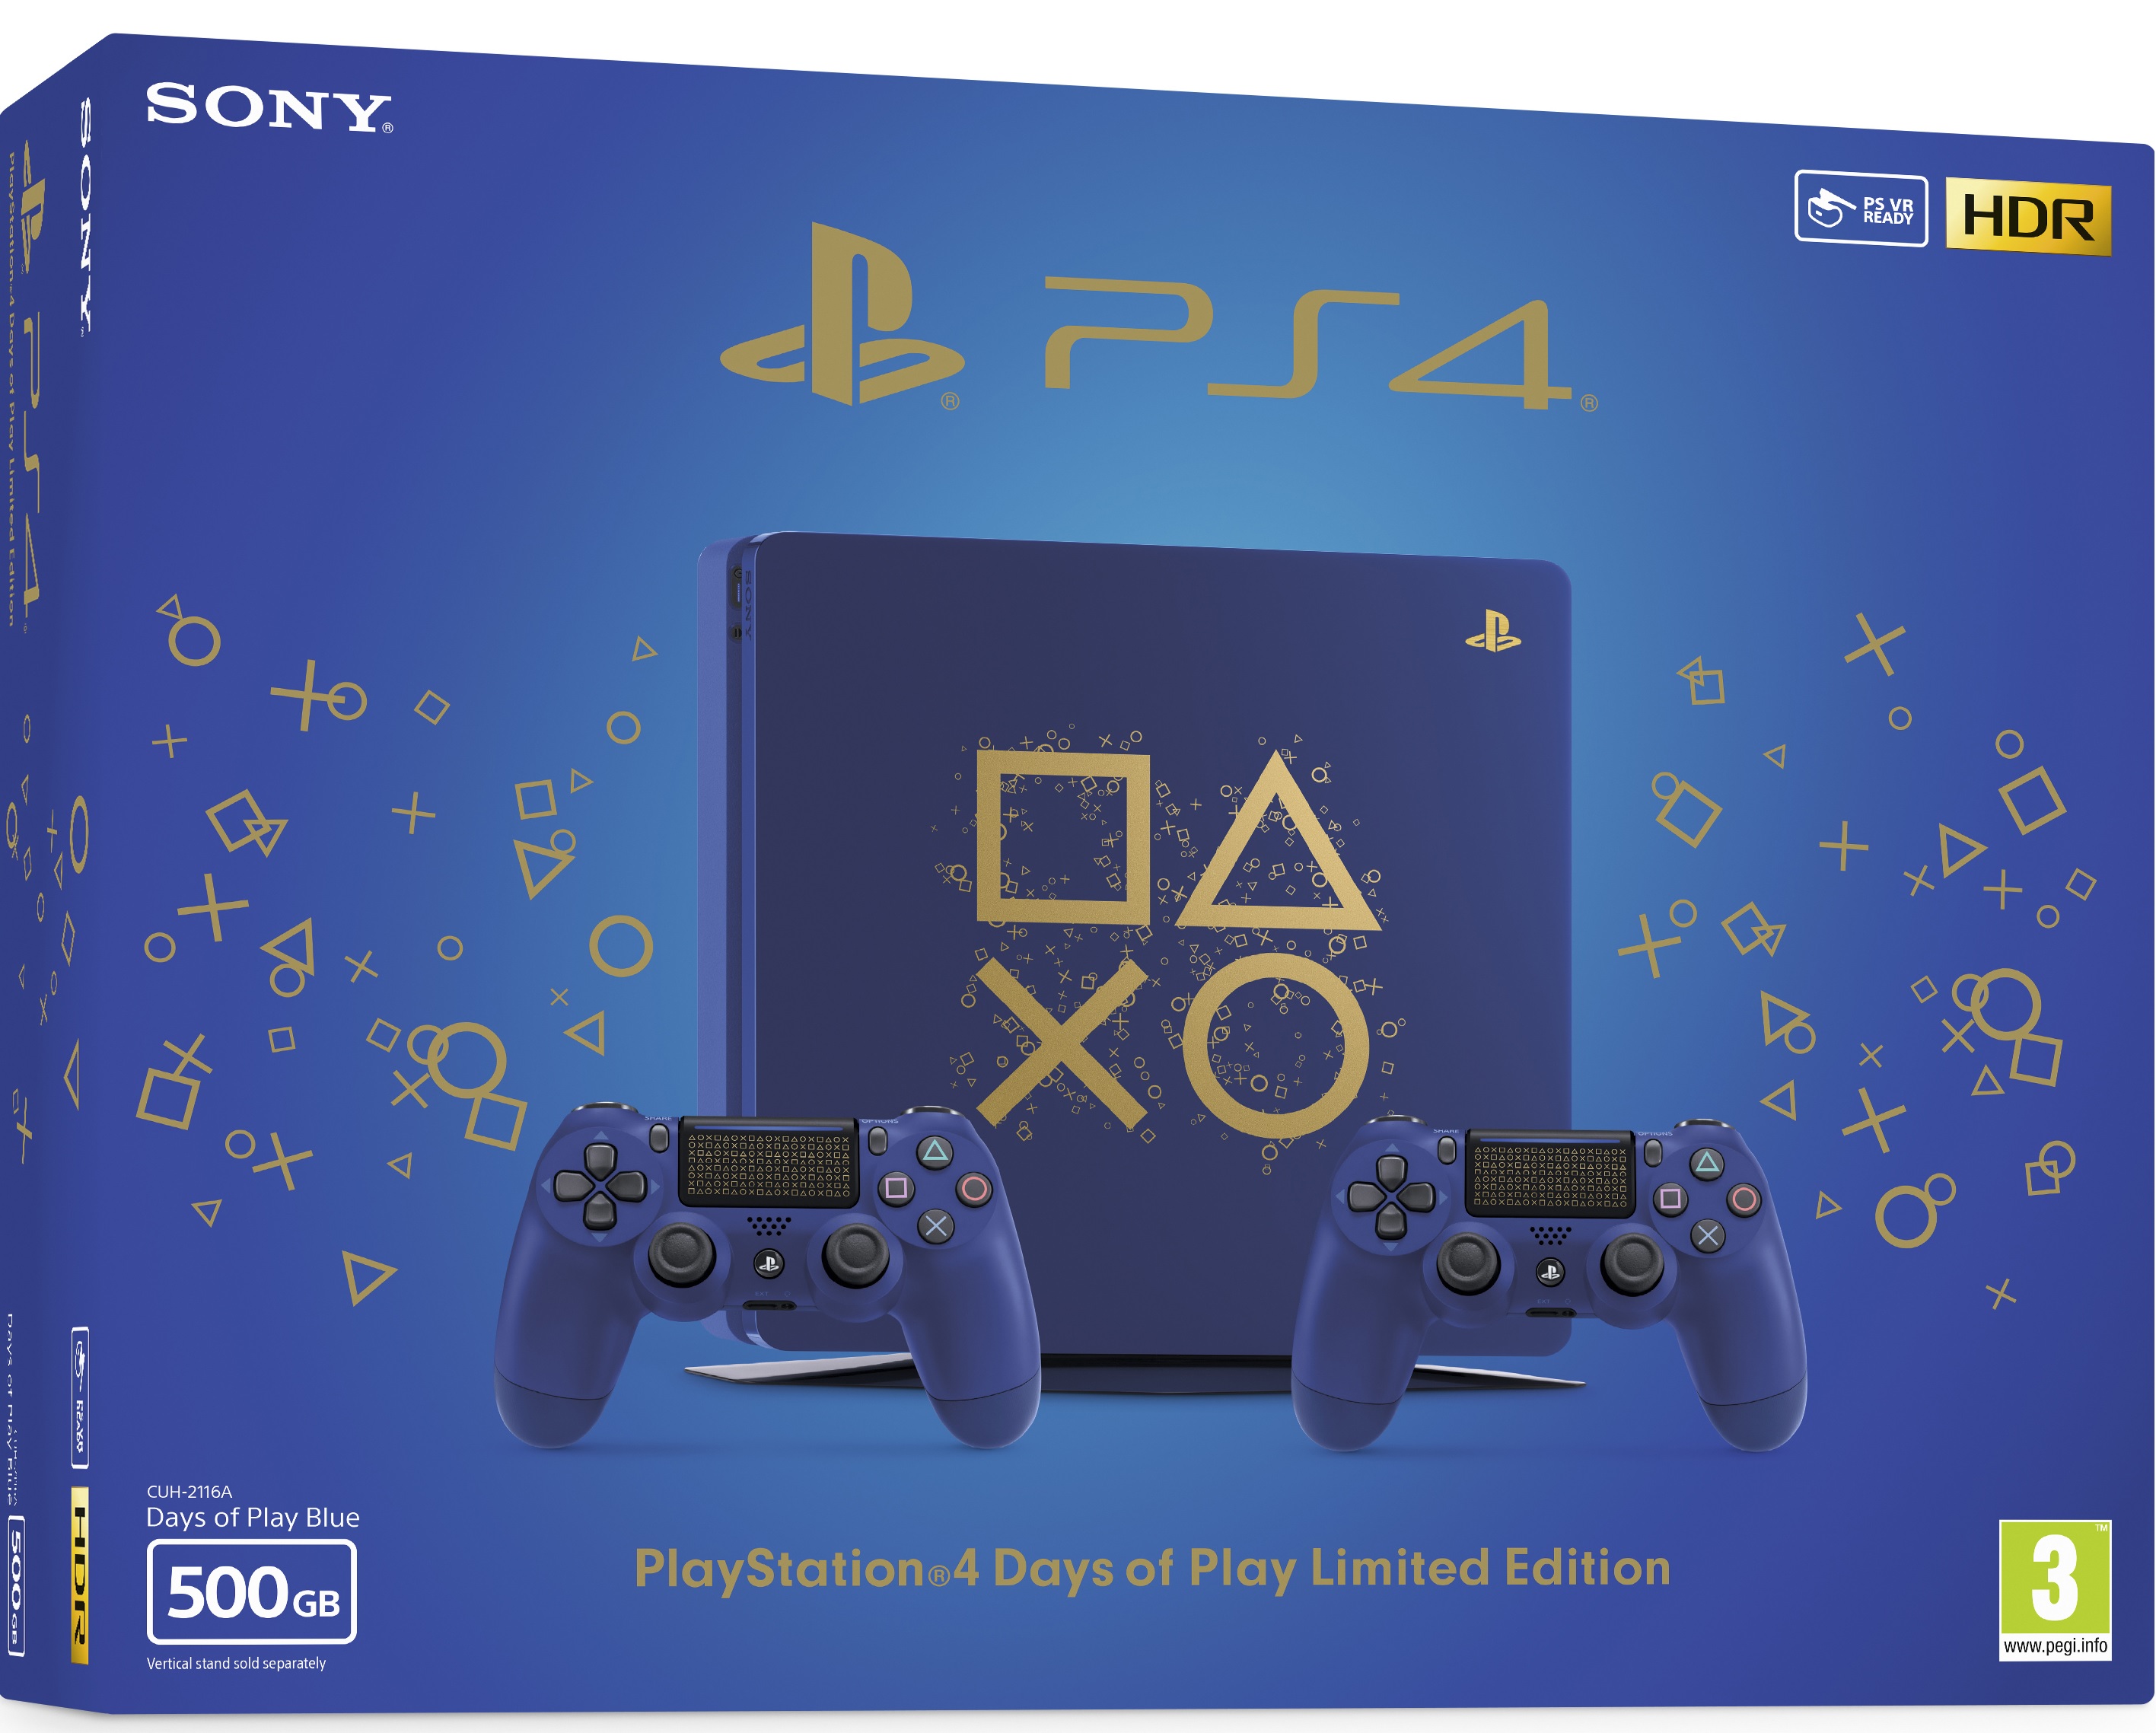 Sony Playstation 4 Slim 500 GB Days of Play Blue Limited Edition